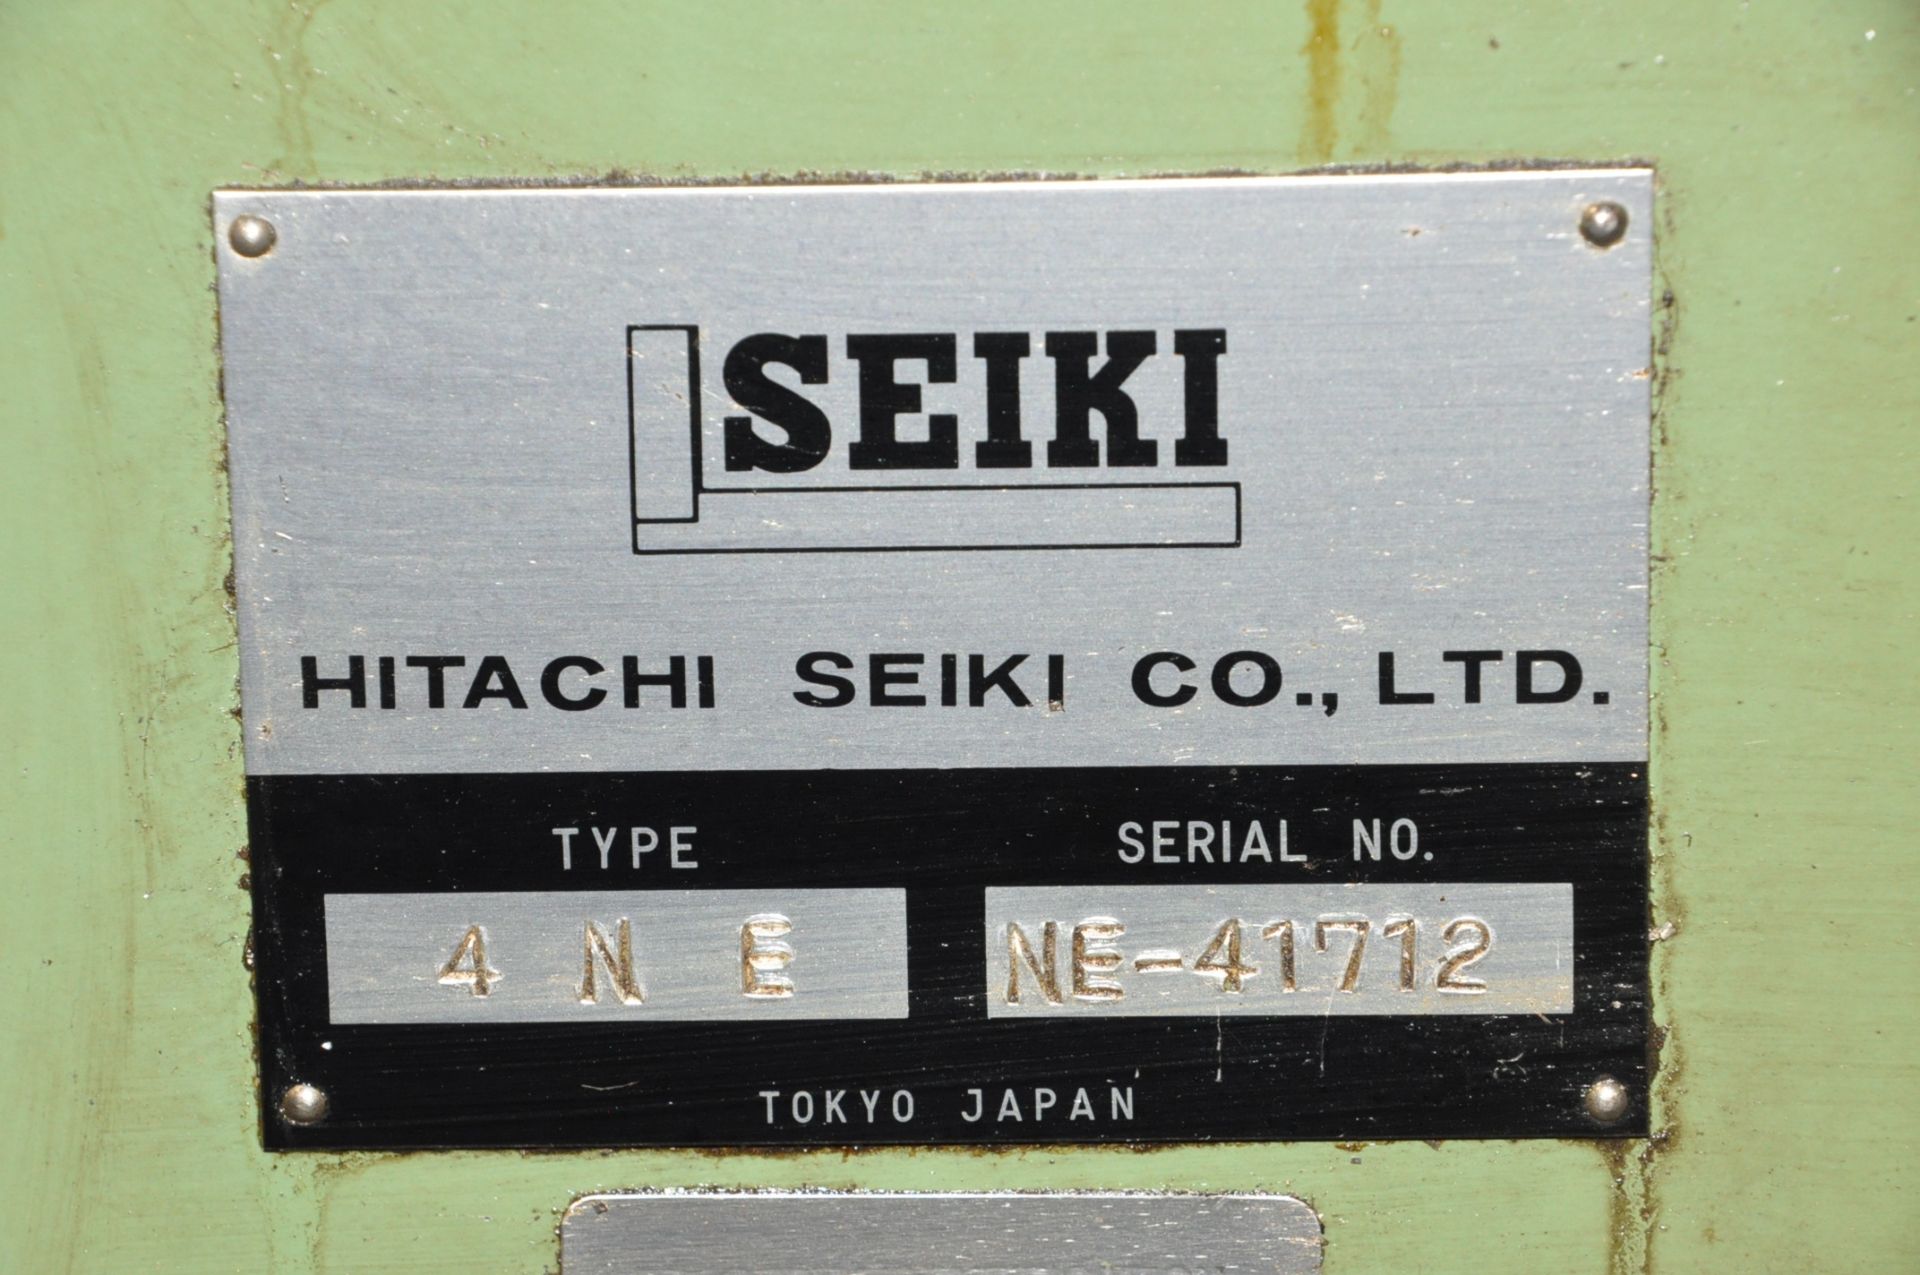 Hitachi-Seiki Model 4NEII-600, CNC Turning Center, S/n NE-41712, Hitachi Seiki System 6T CNC - Image 11 of 11